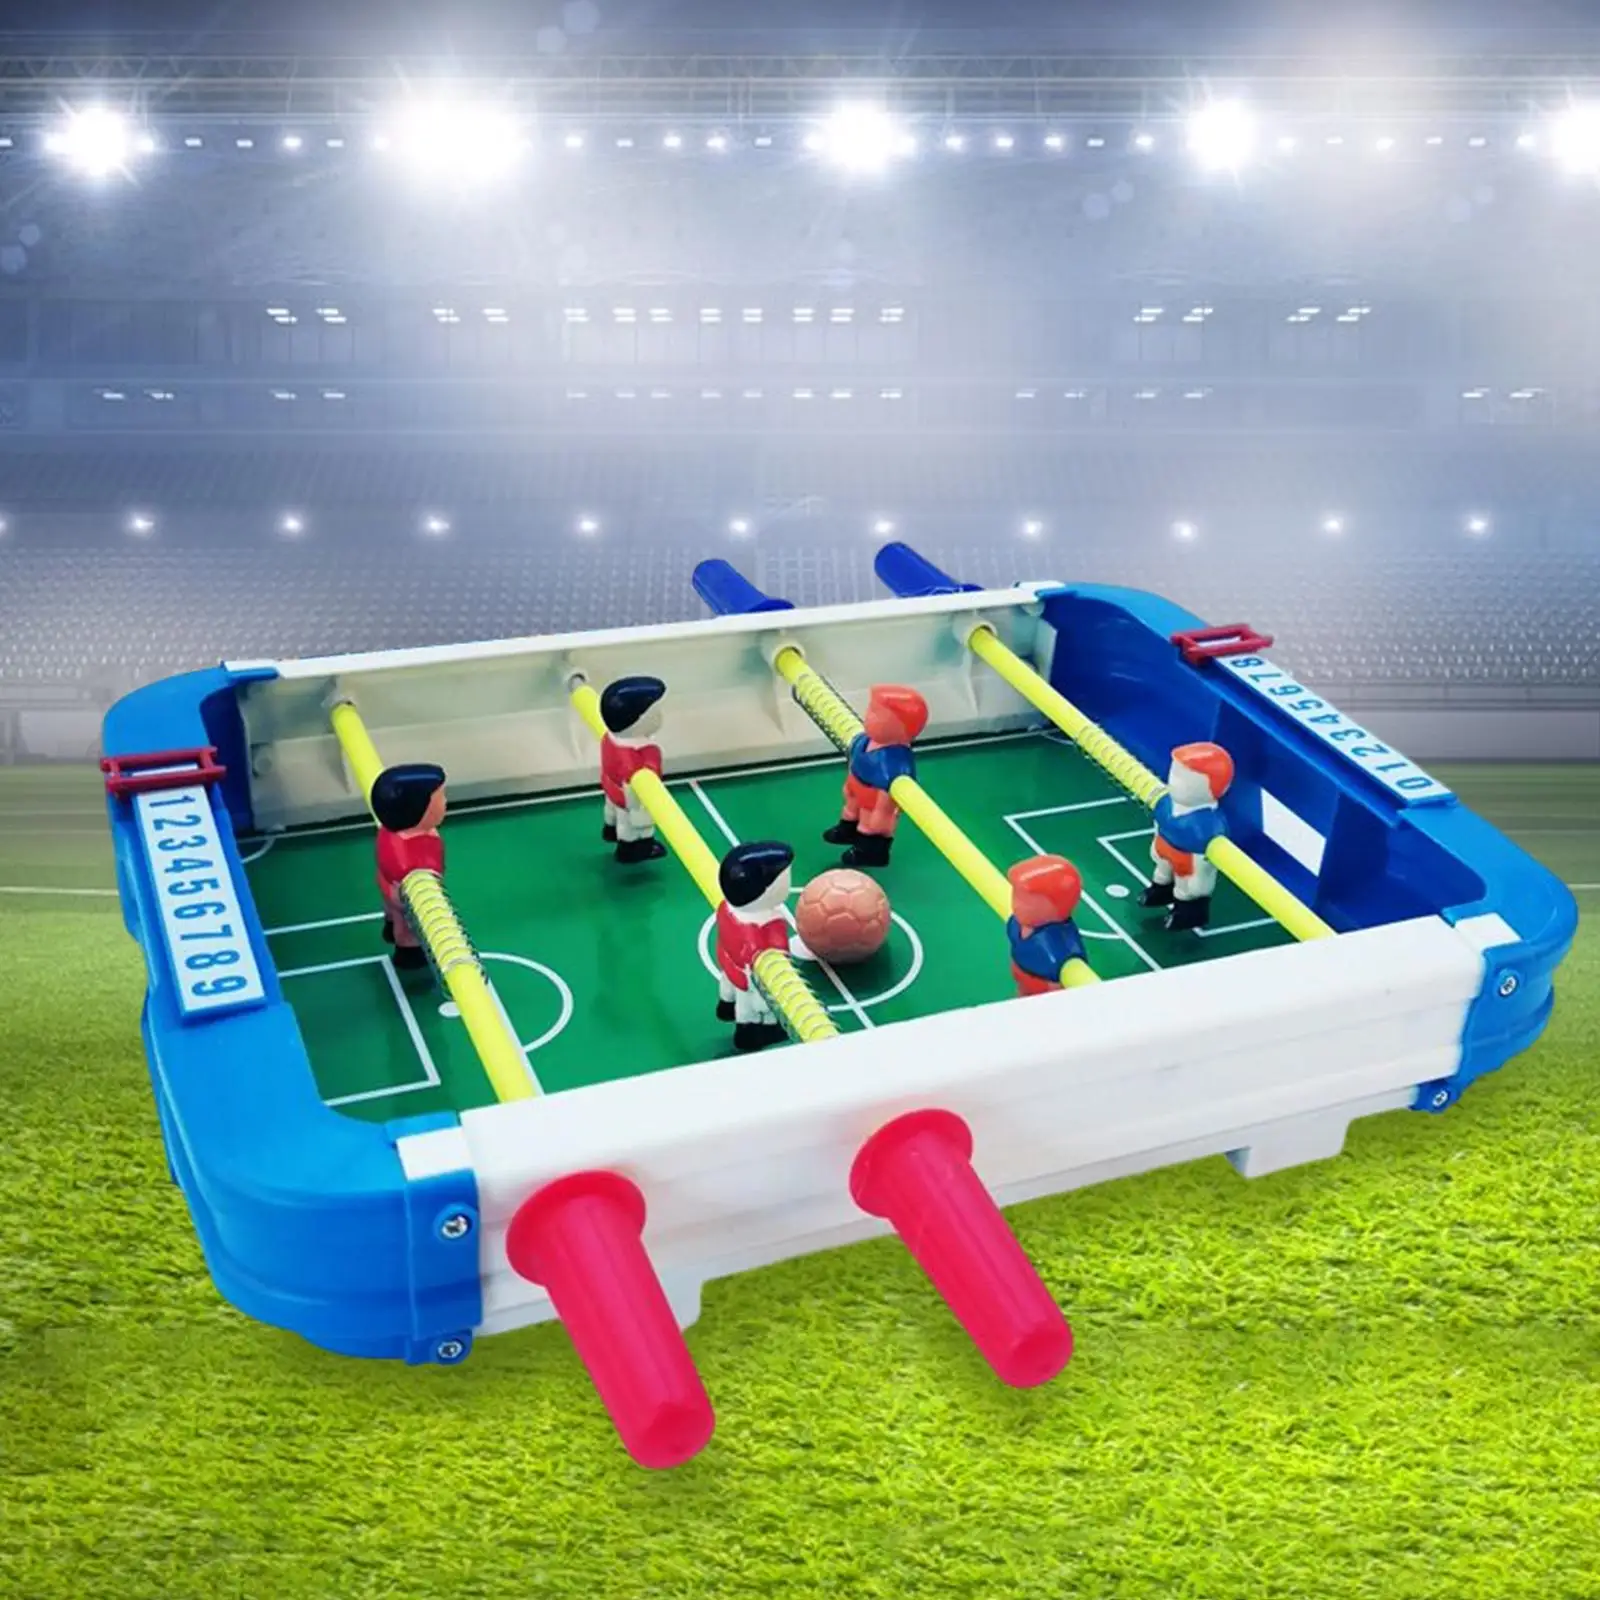 Foosball Table Top Football Game Entertainment for Boys Girls Children